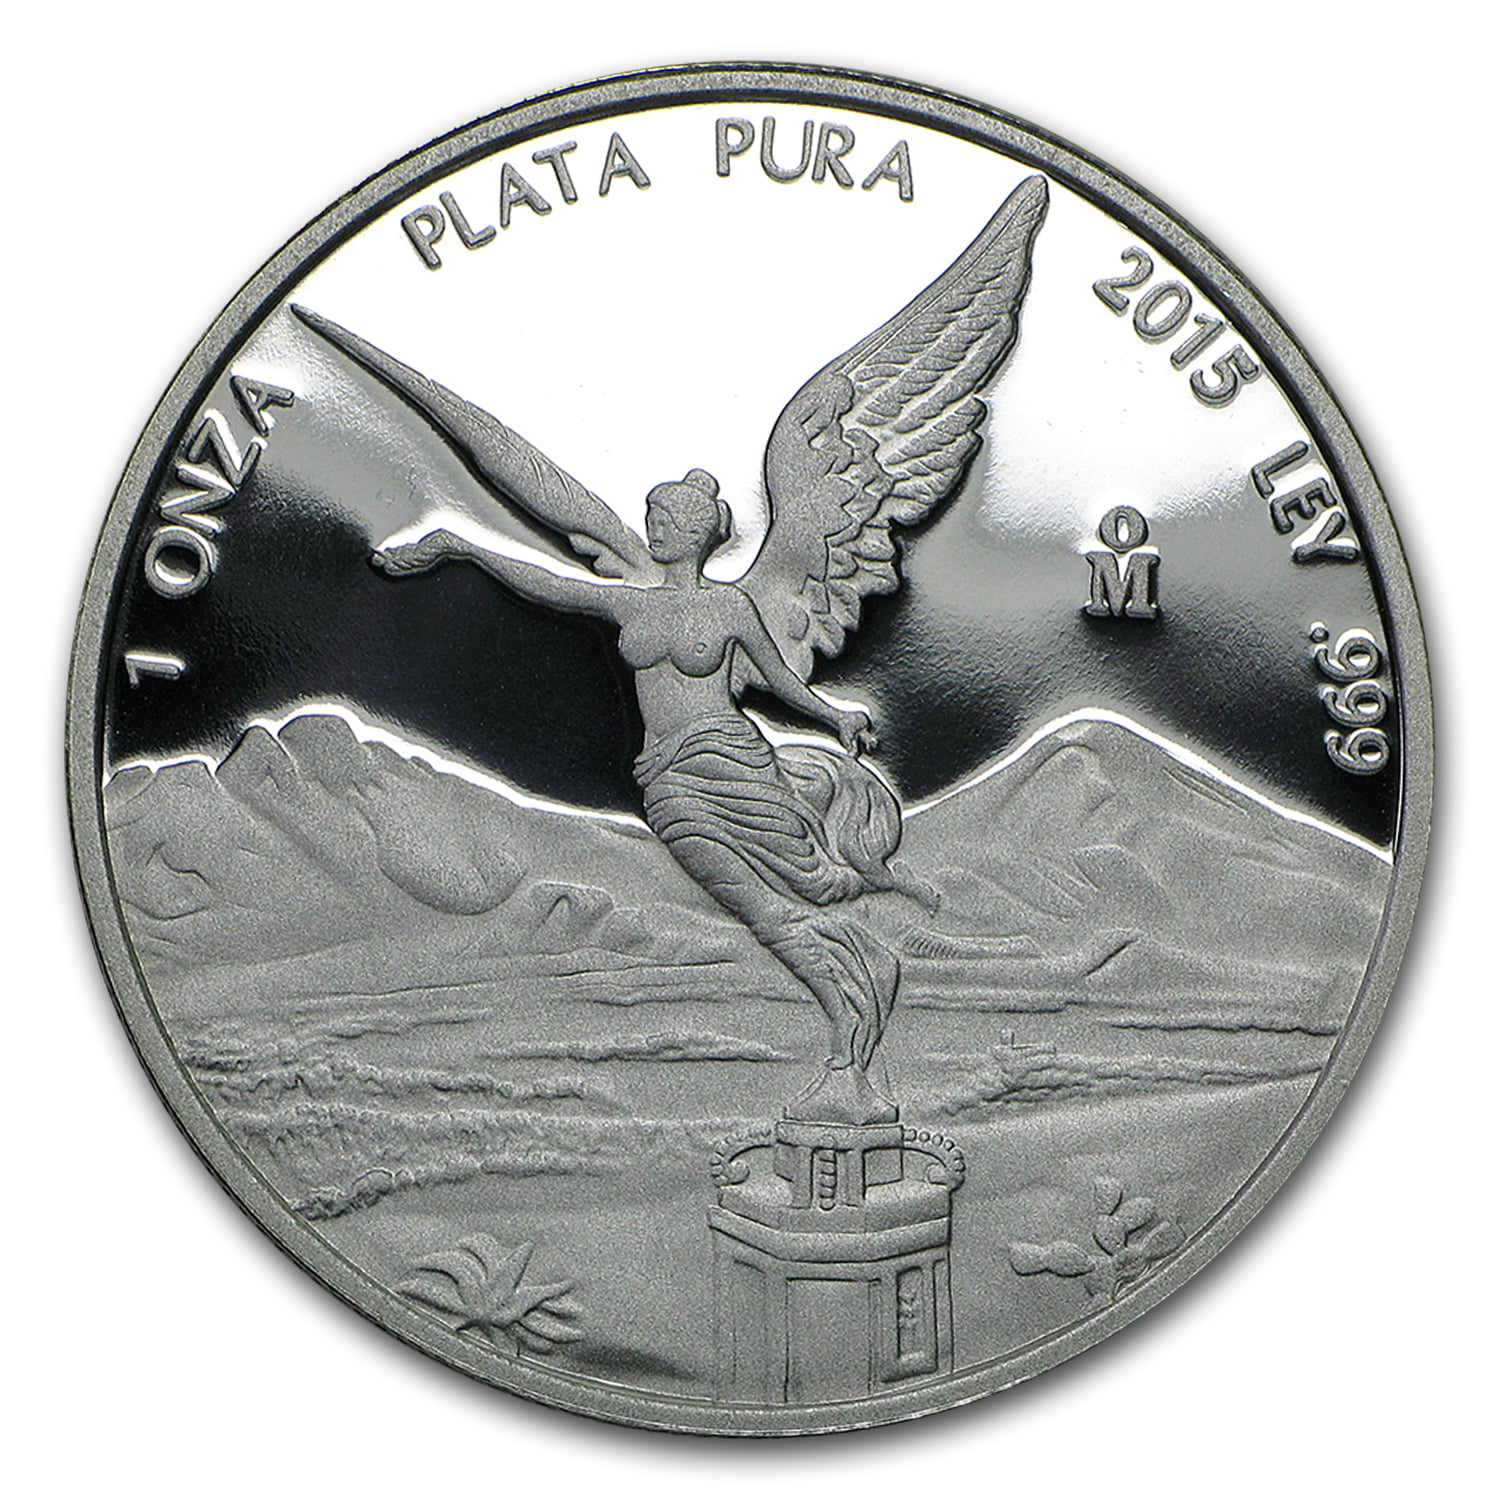 Libertad 2 oz .999 fine silver Proof Mexico 2015 low mintage 